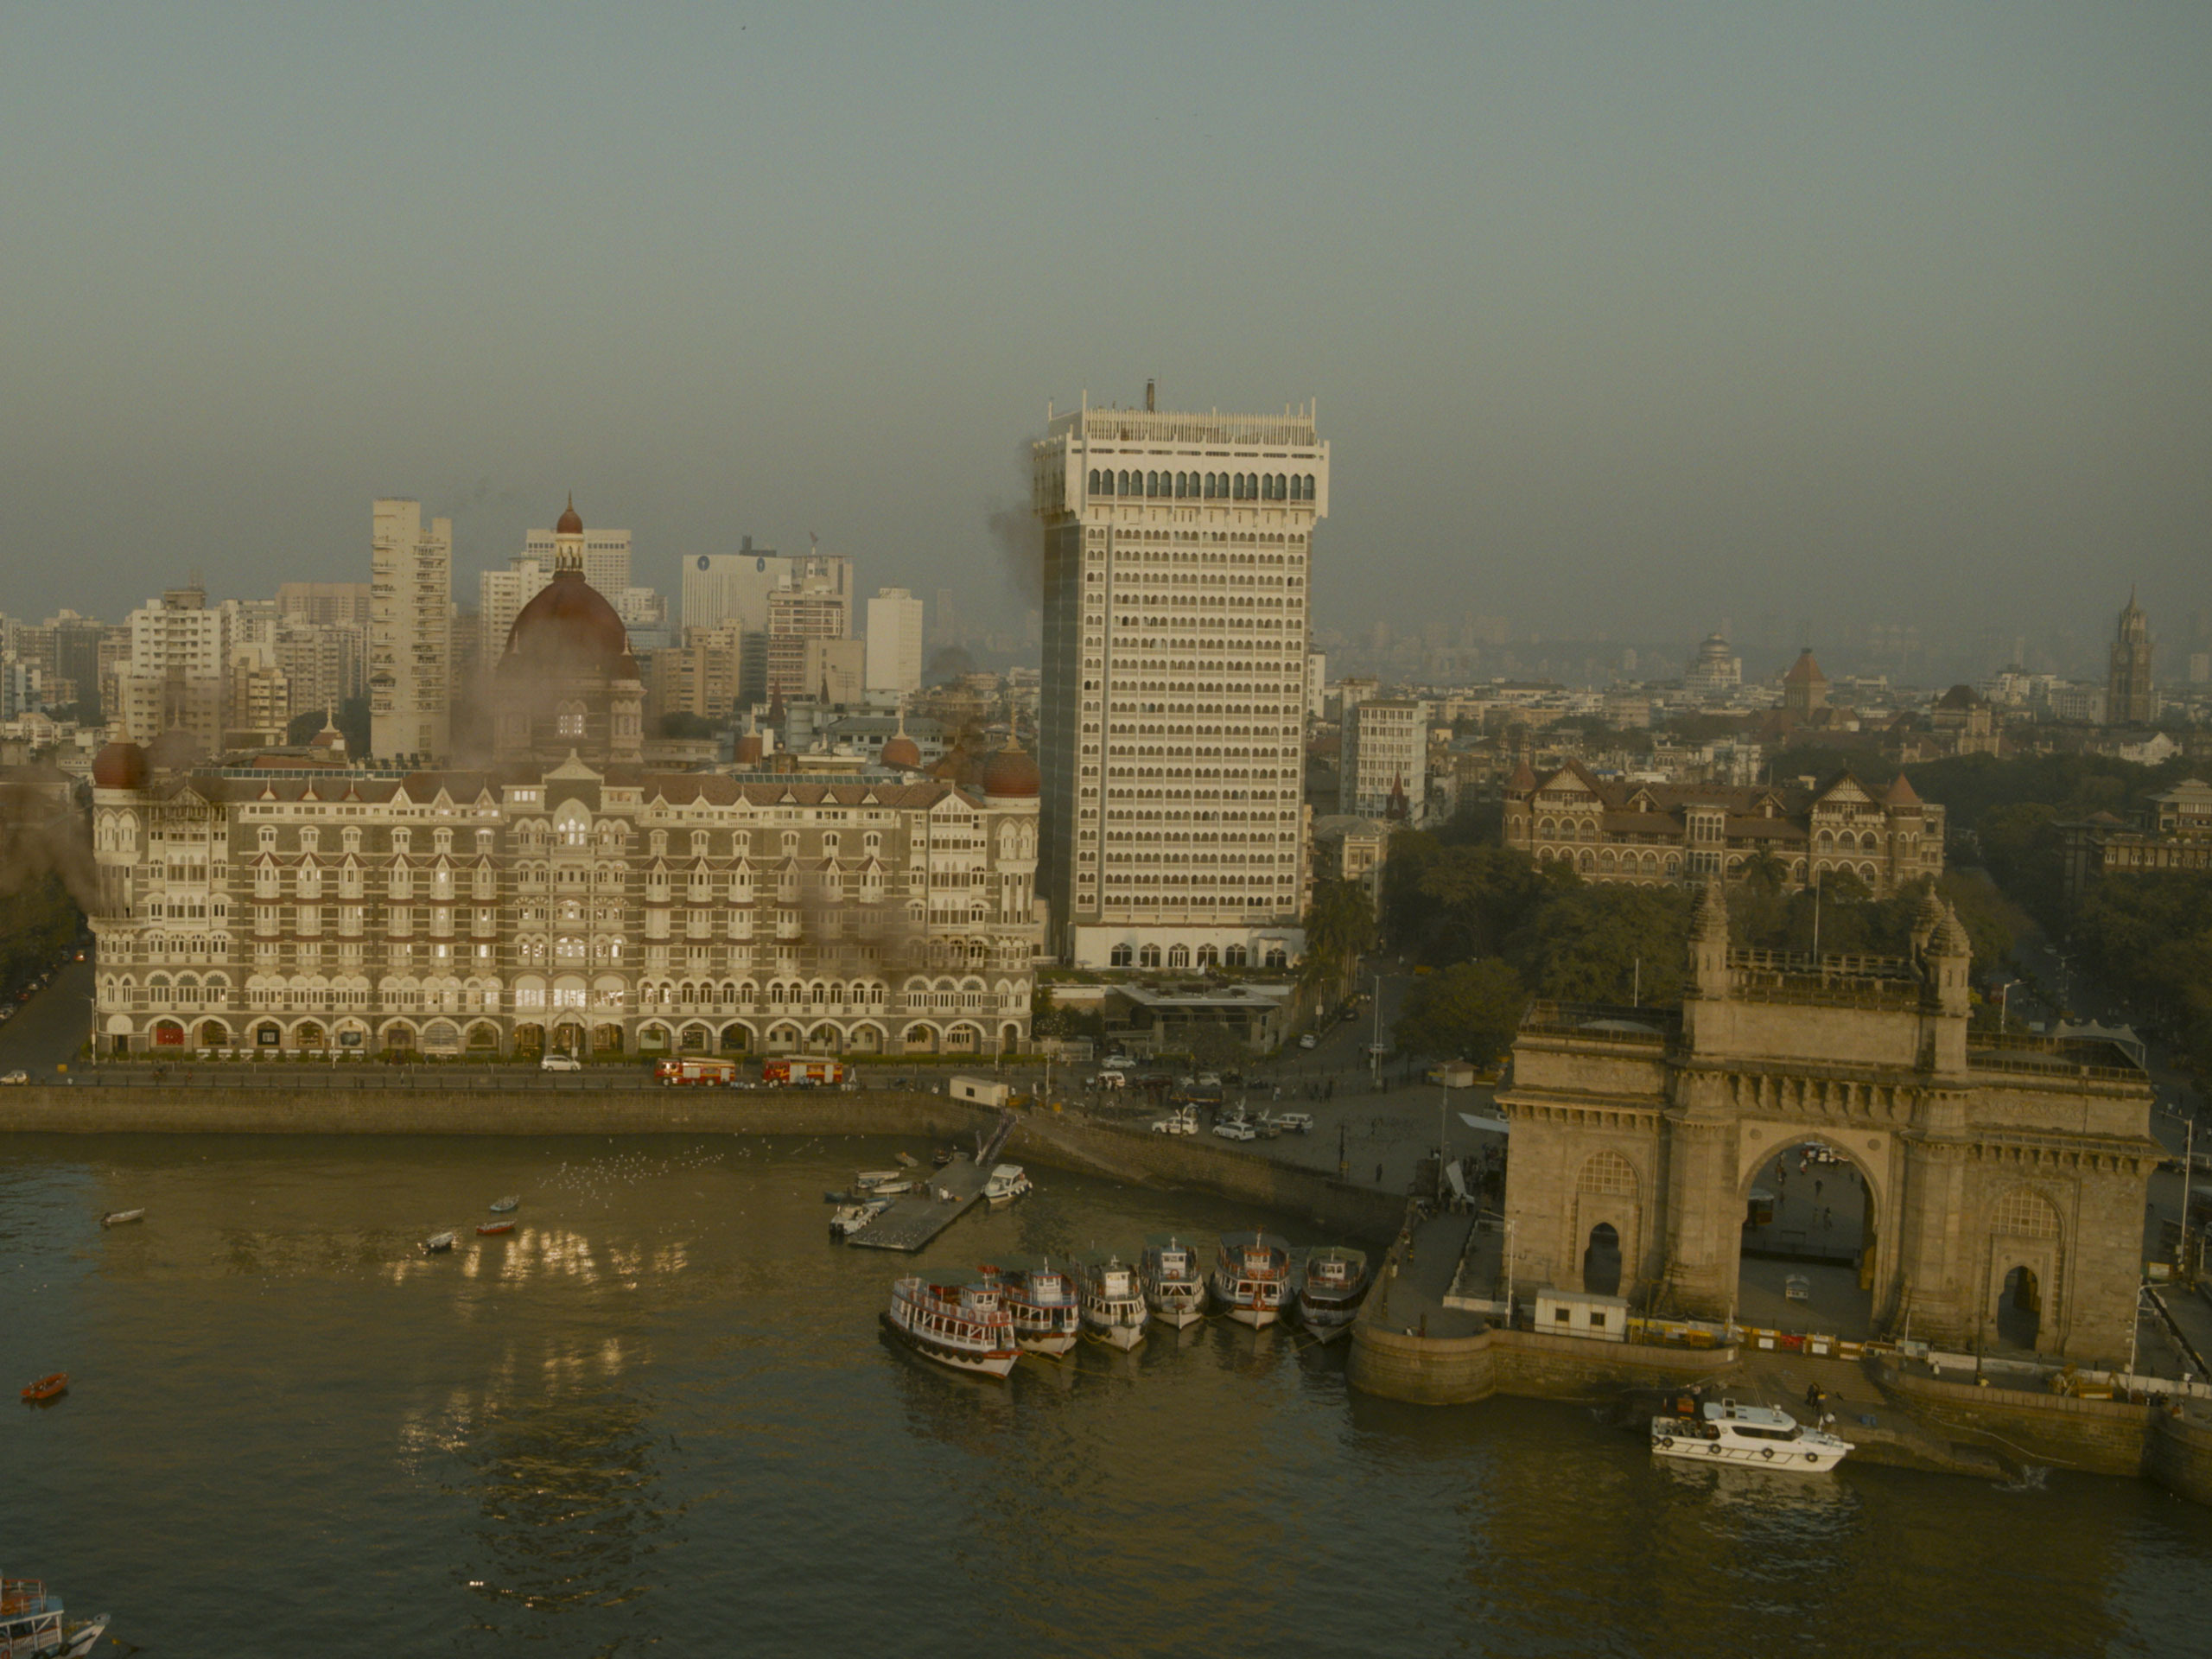 Mumbai Diaries 26/11: Recovery | Season 1 | Episode 8